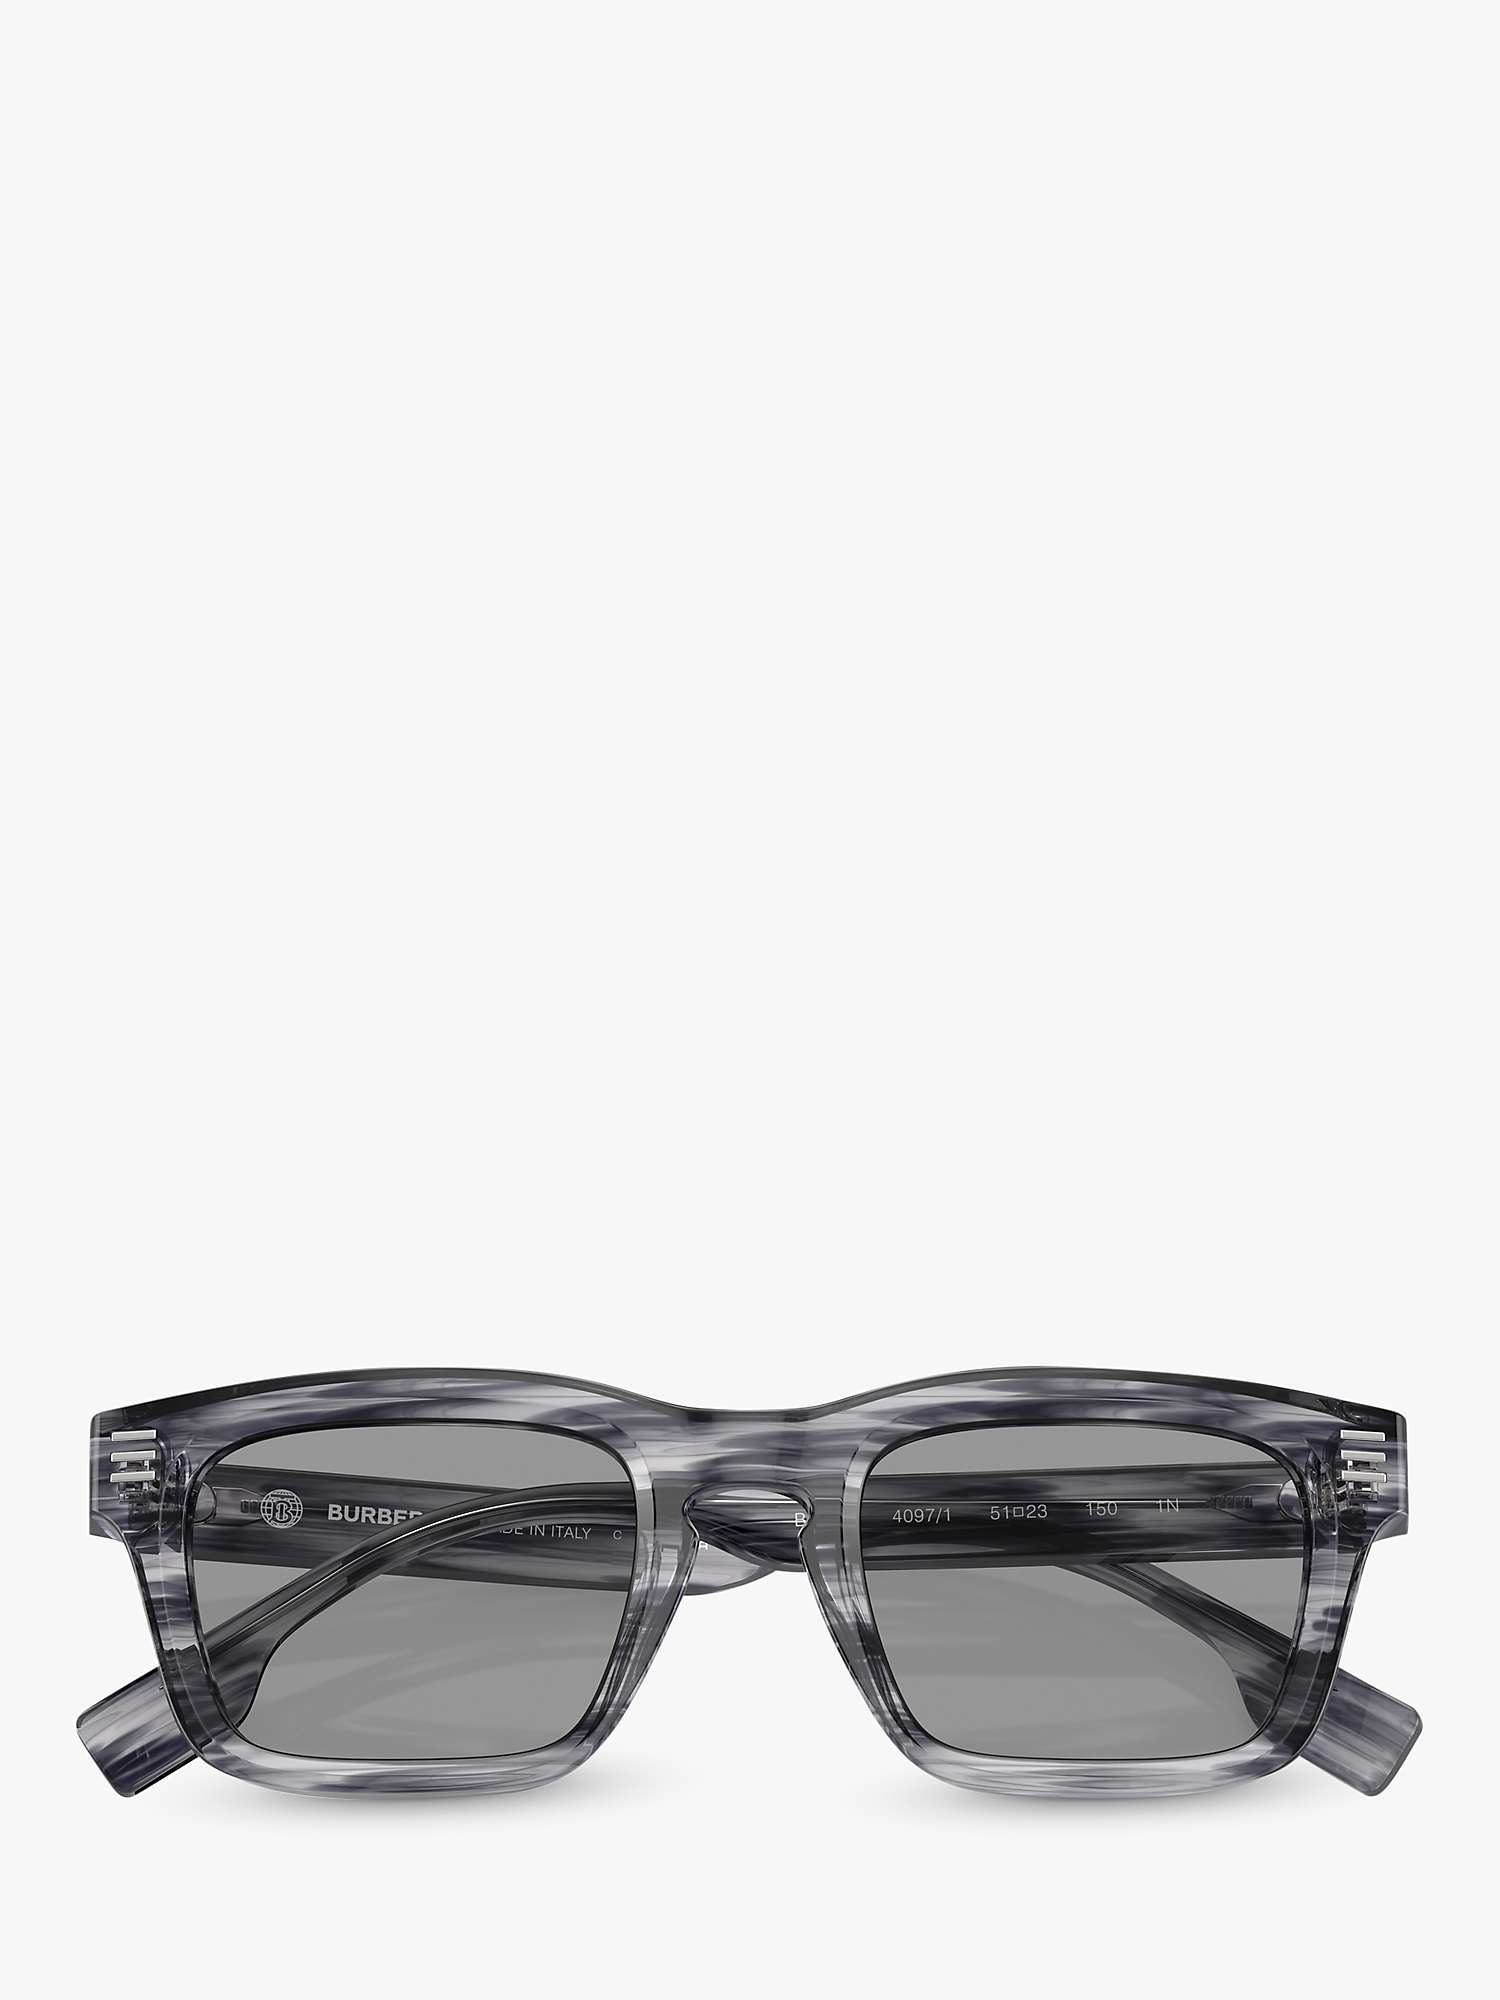 Buy Burberry BE4403 Men's Rectangular Sunglasses, Grey Online at johnlewis.com